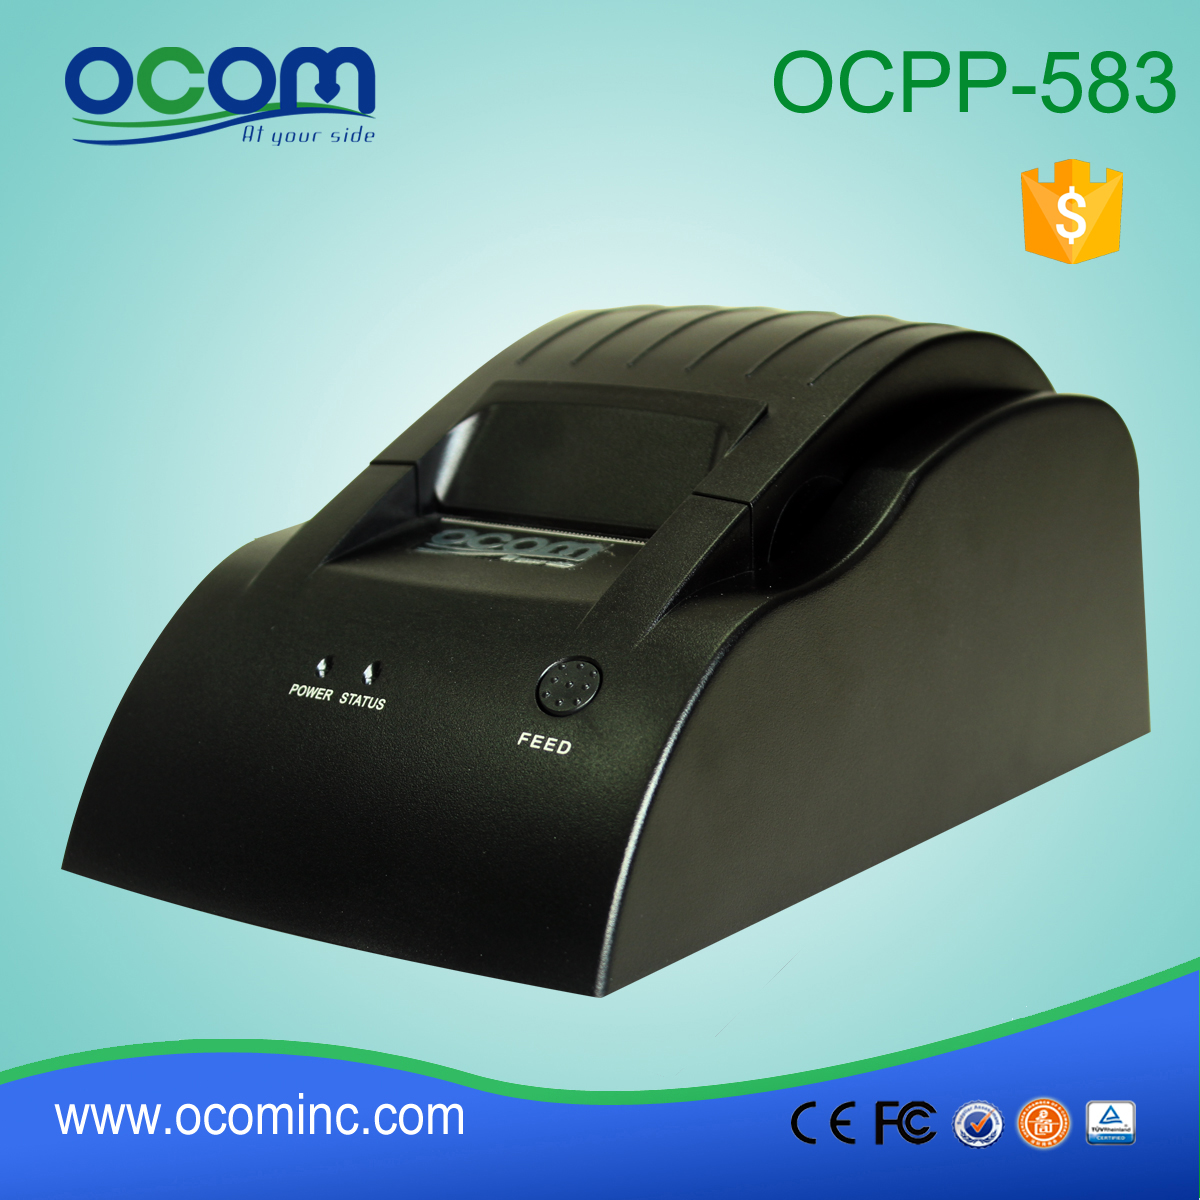 OCPP-583-P 58 mm POS Θερμικός εκτυπωτής εισιτηρίου 36p παράλληλη θύρα